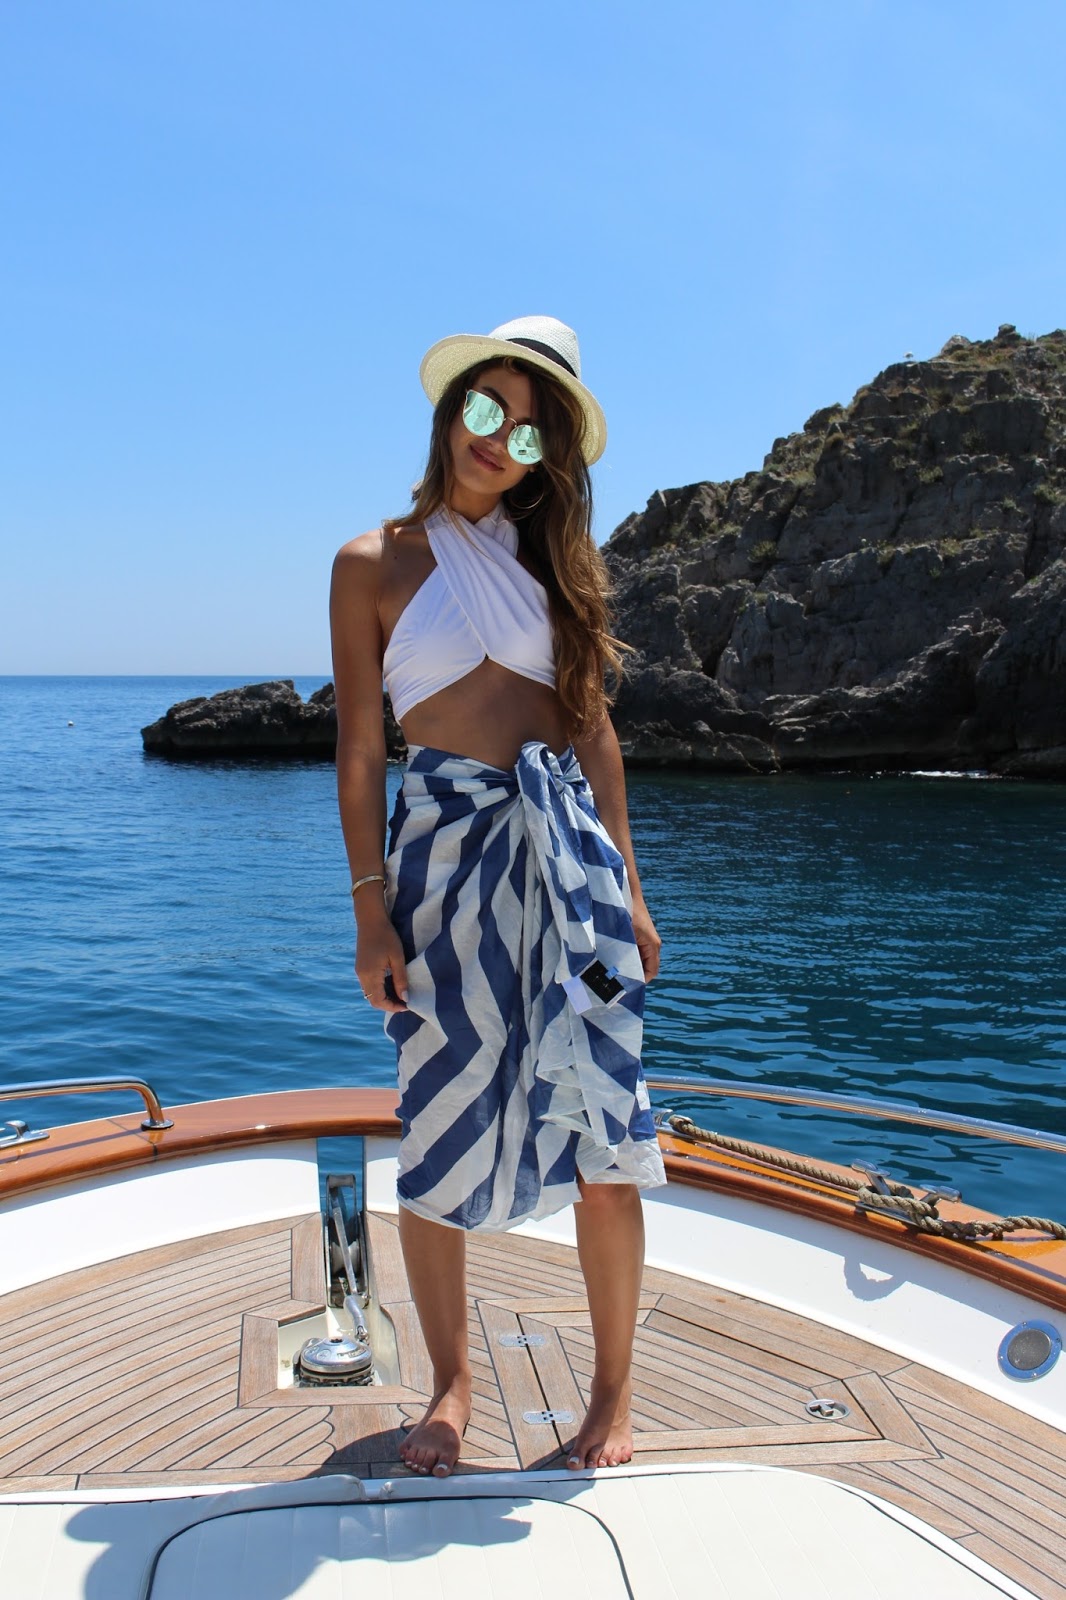 Evanne Lucas: (Day 8 - Boat Day/ Capri) An Italian Honeymoon